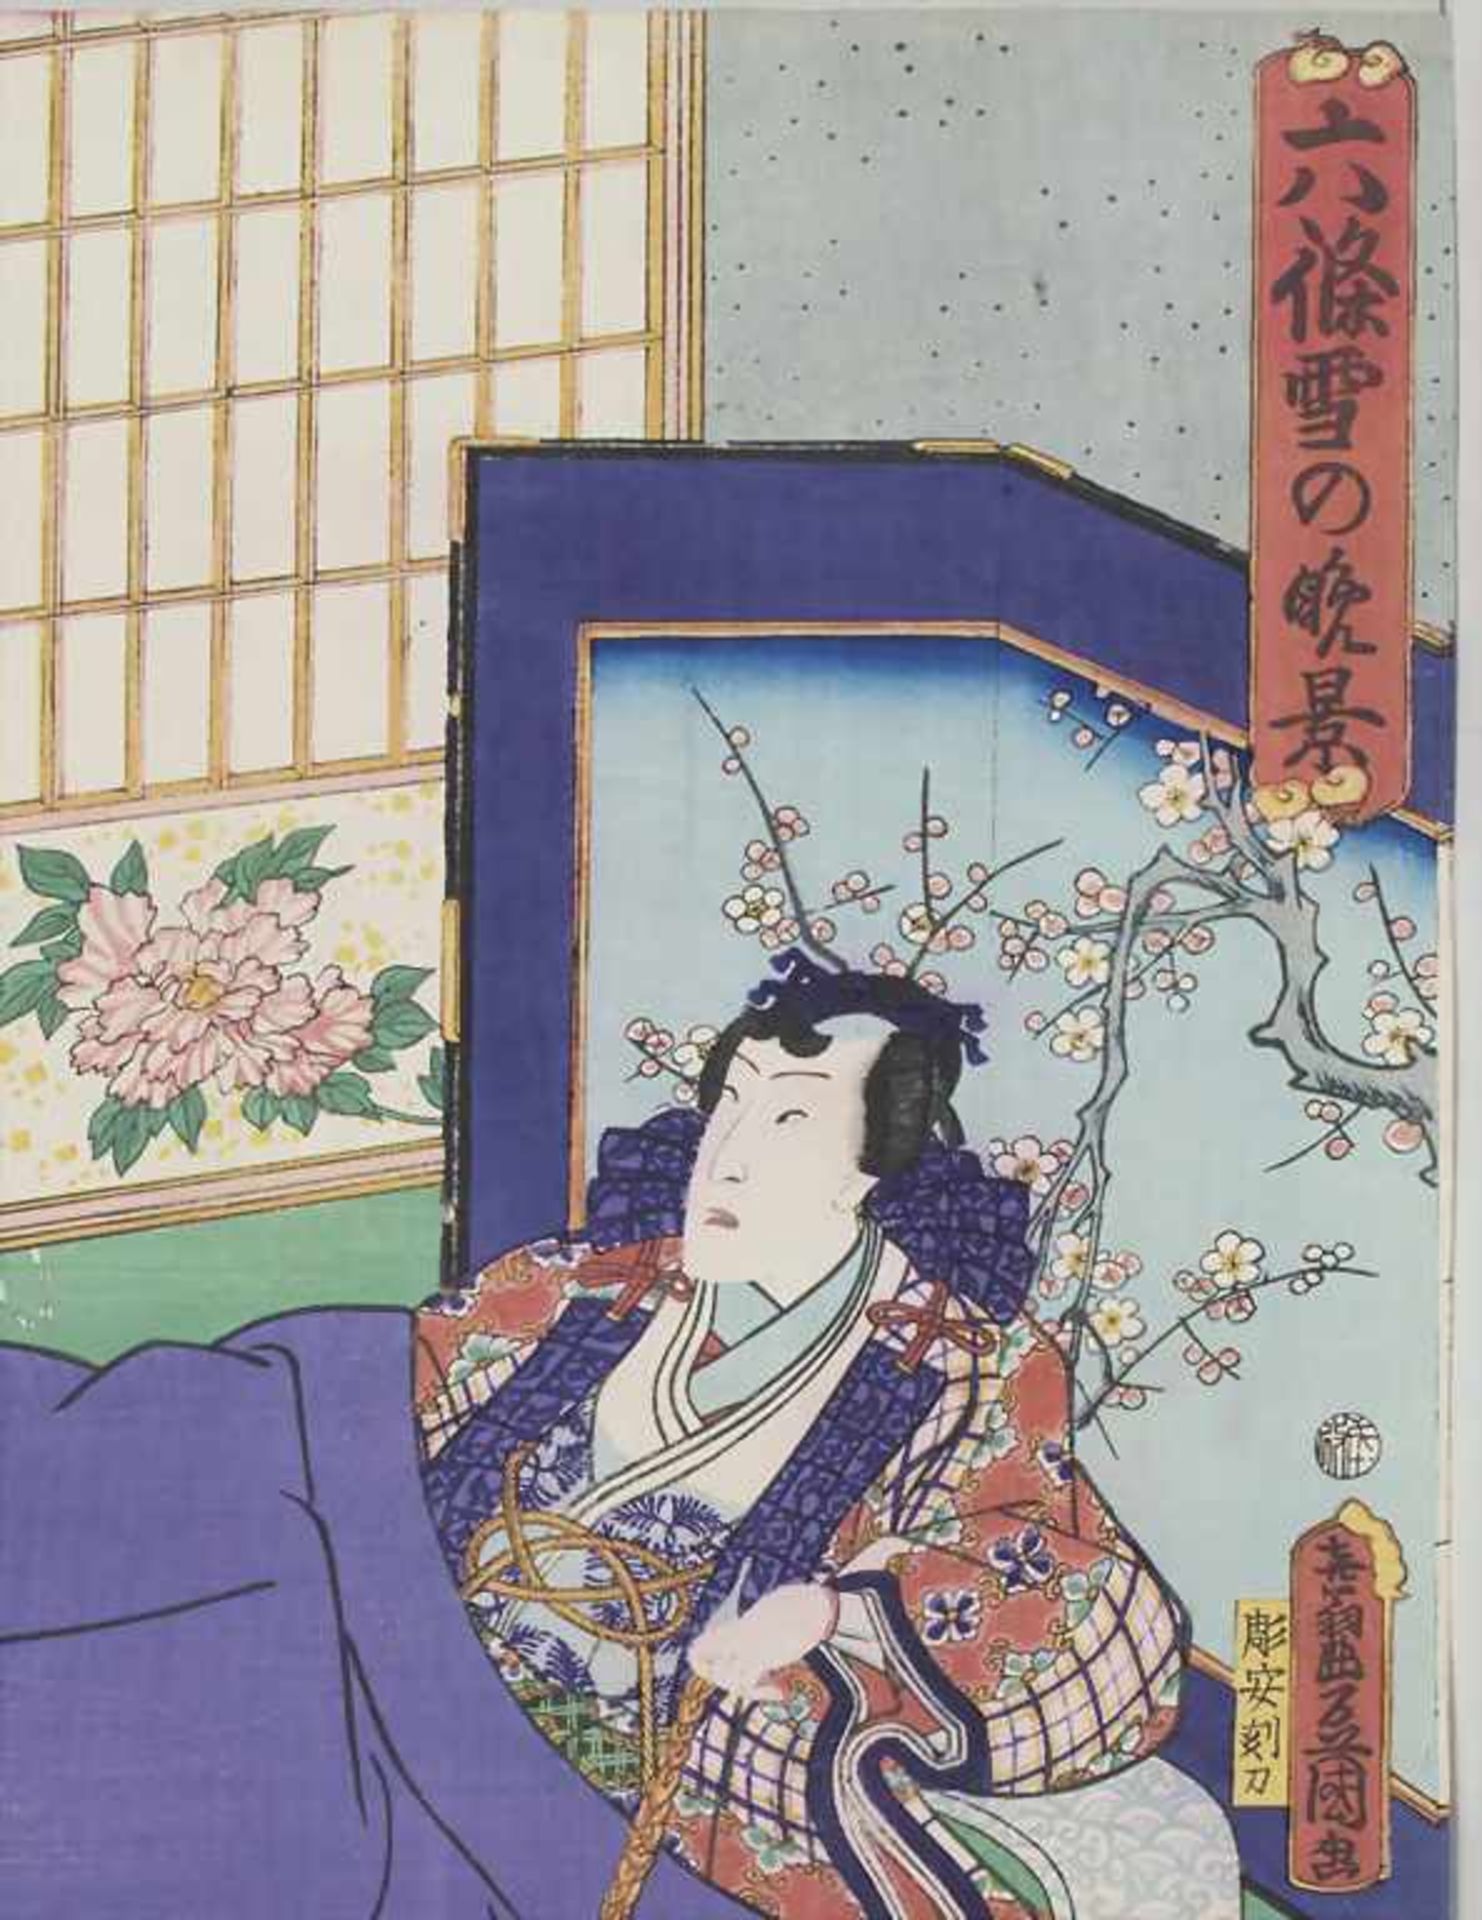 Kuniyoshi Utagawa & Kunisada (18./19. Jh.), 'Interieur mit Kabuki-Schauspieler' / 'An interior